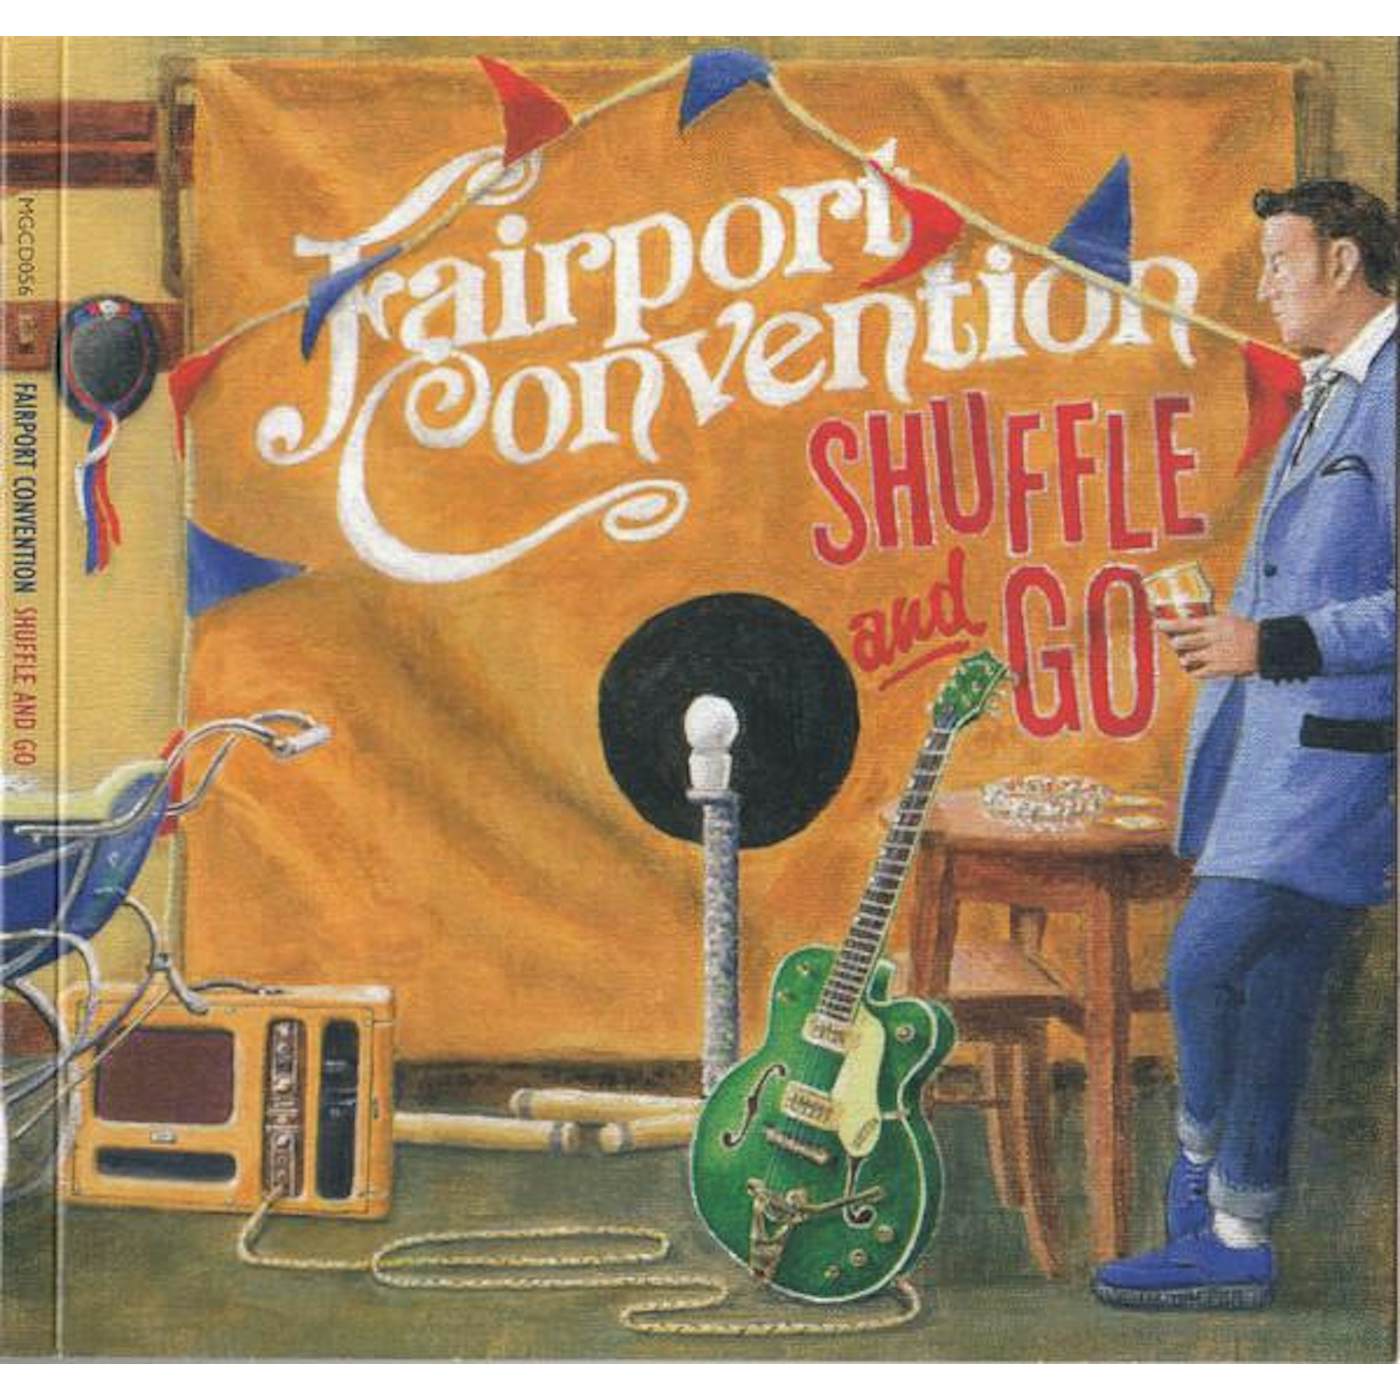 Fairport Convention SHUFFLE & GO CD